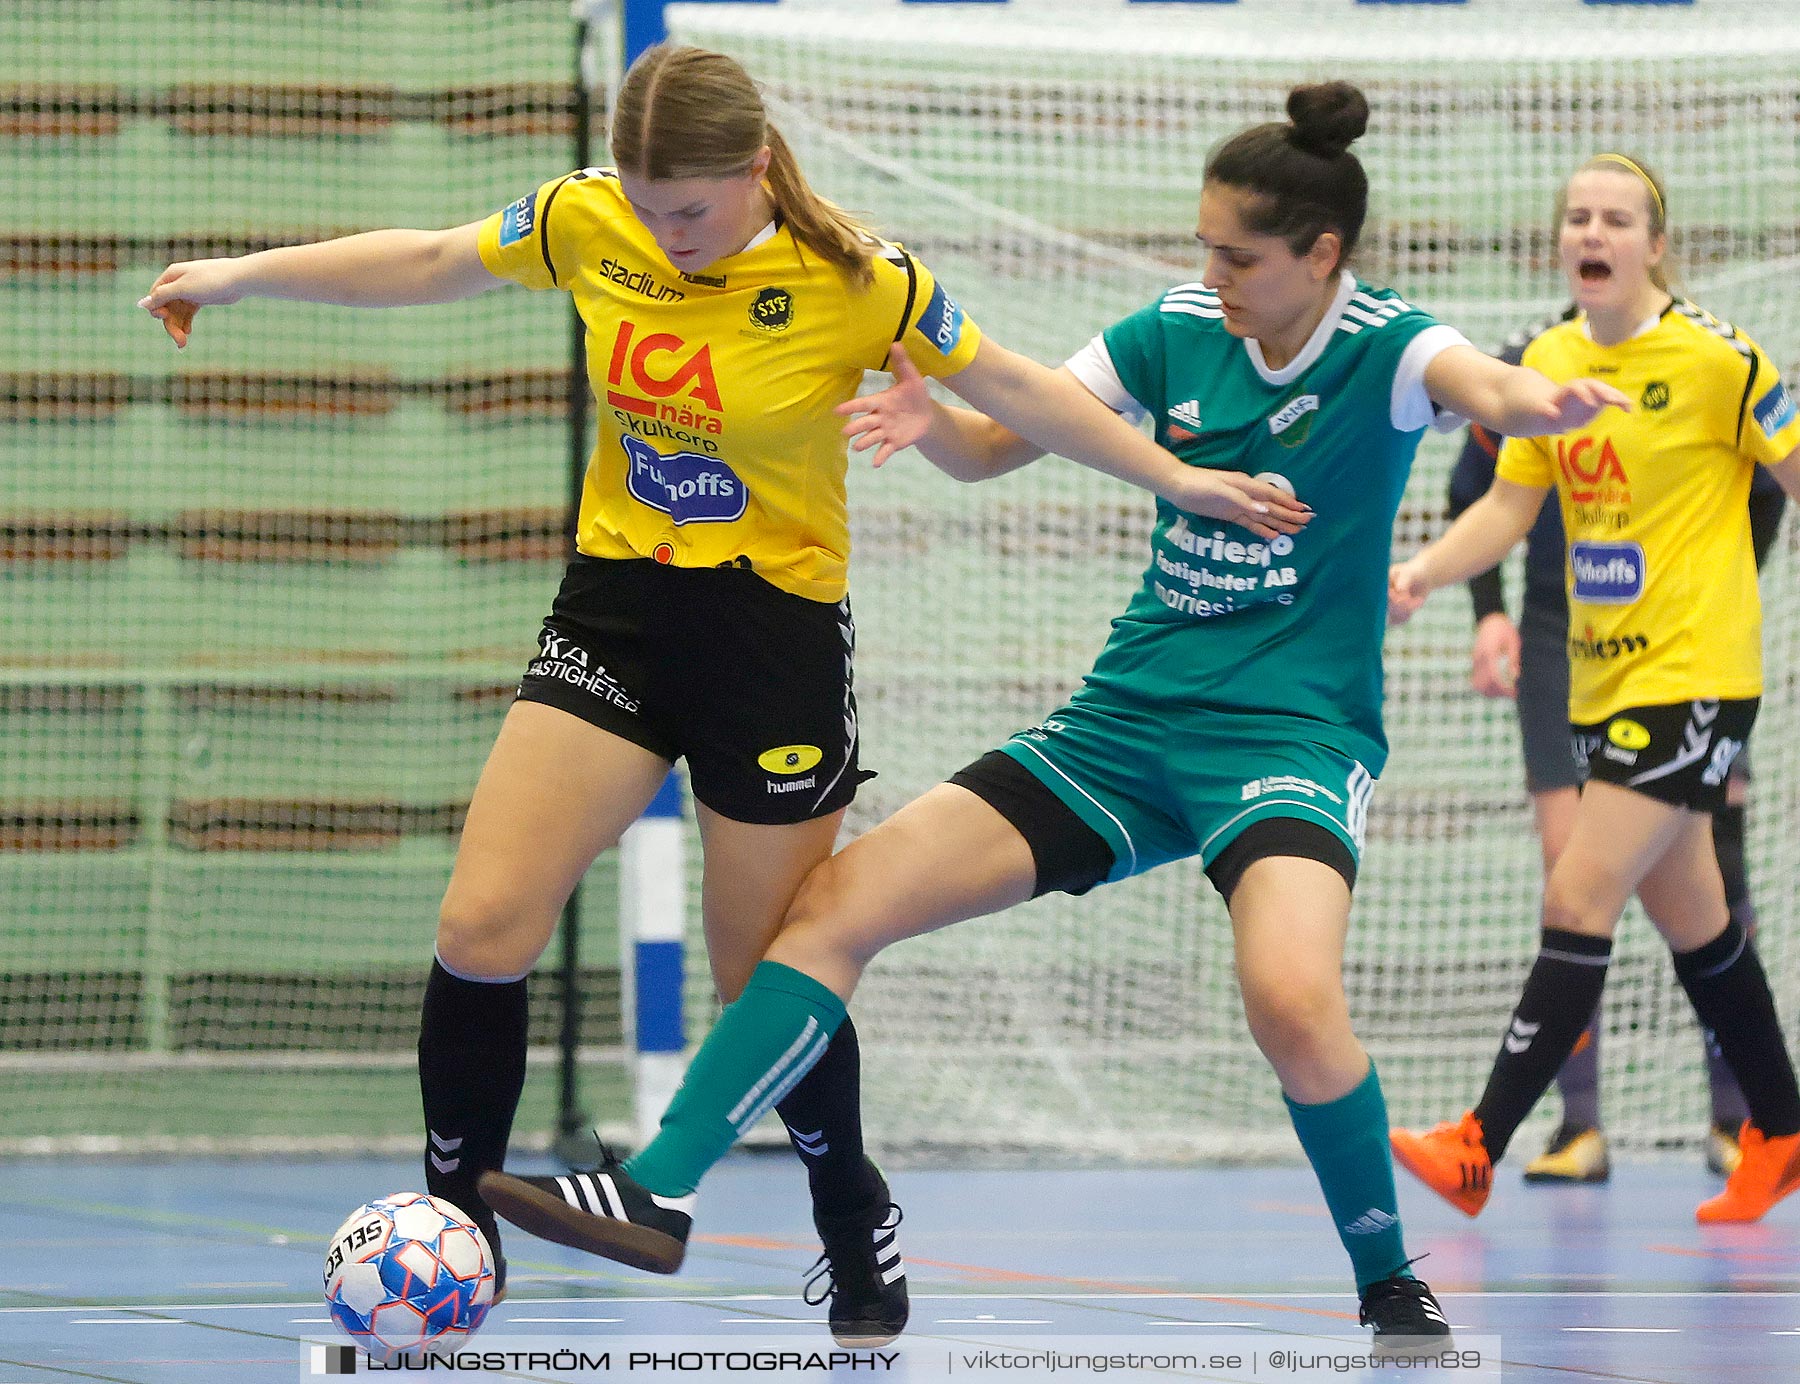 Skövde Futsalcup 2021 Damer Våmbs IF-Skultorps IF 2,dam,Arena Skövde,Skövde,Sverige,Futsal,,2021,271080